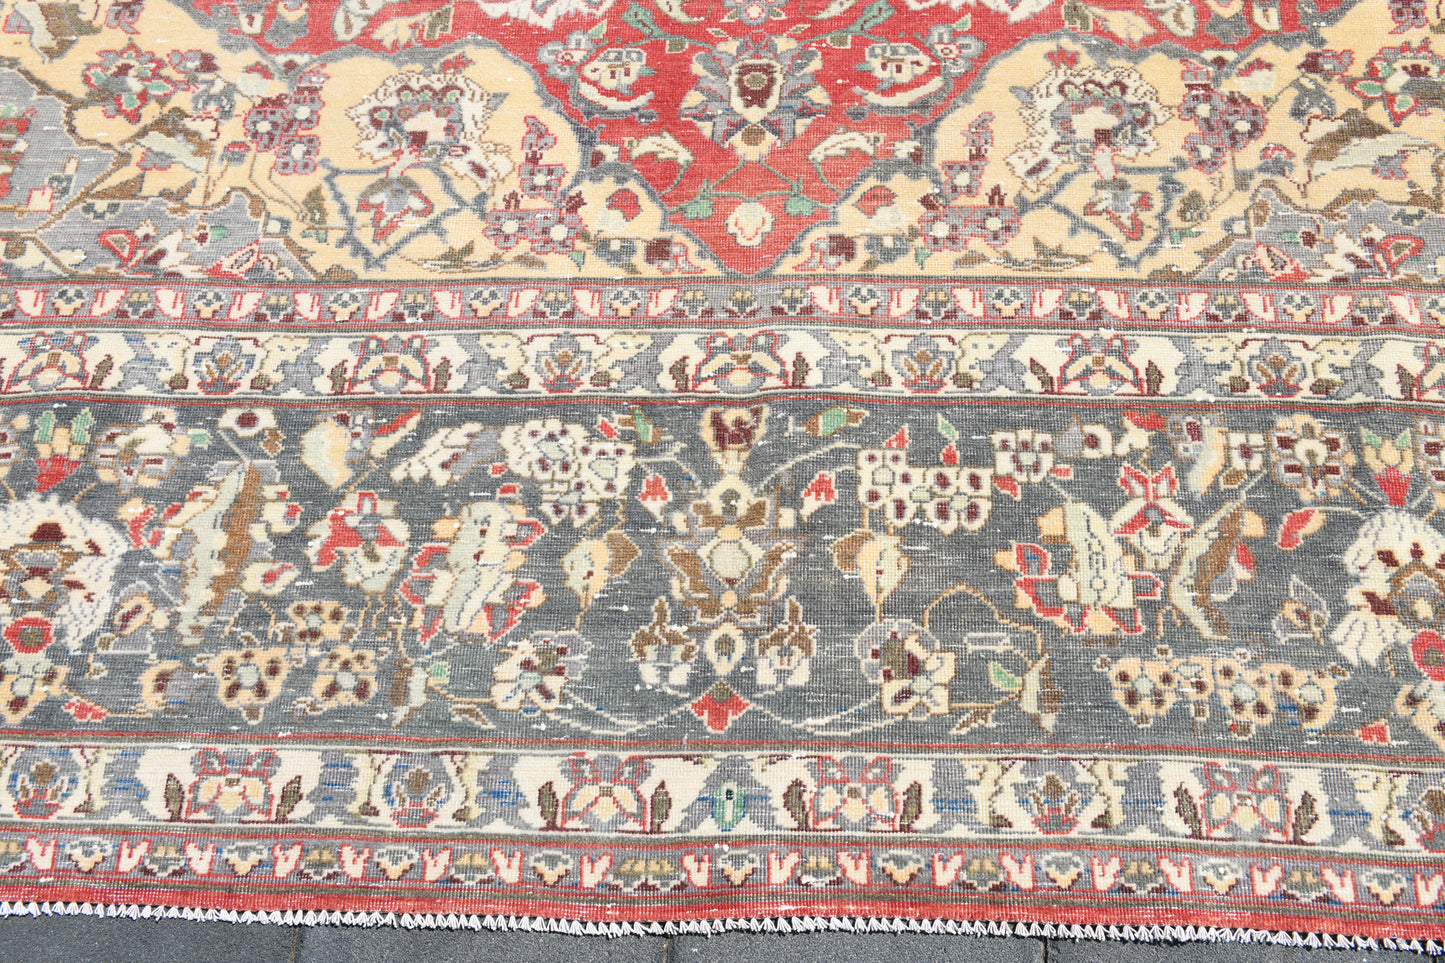 9'7" x 14'1" Vintage Persian Rug - 17976